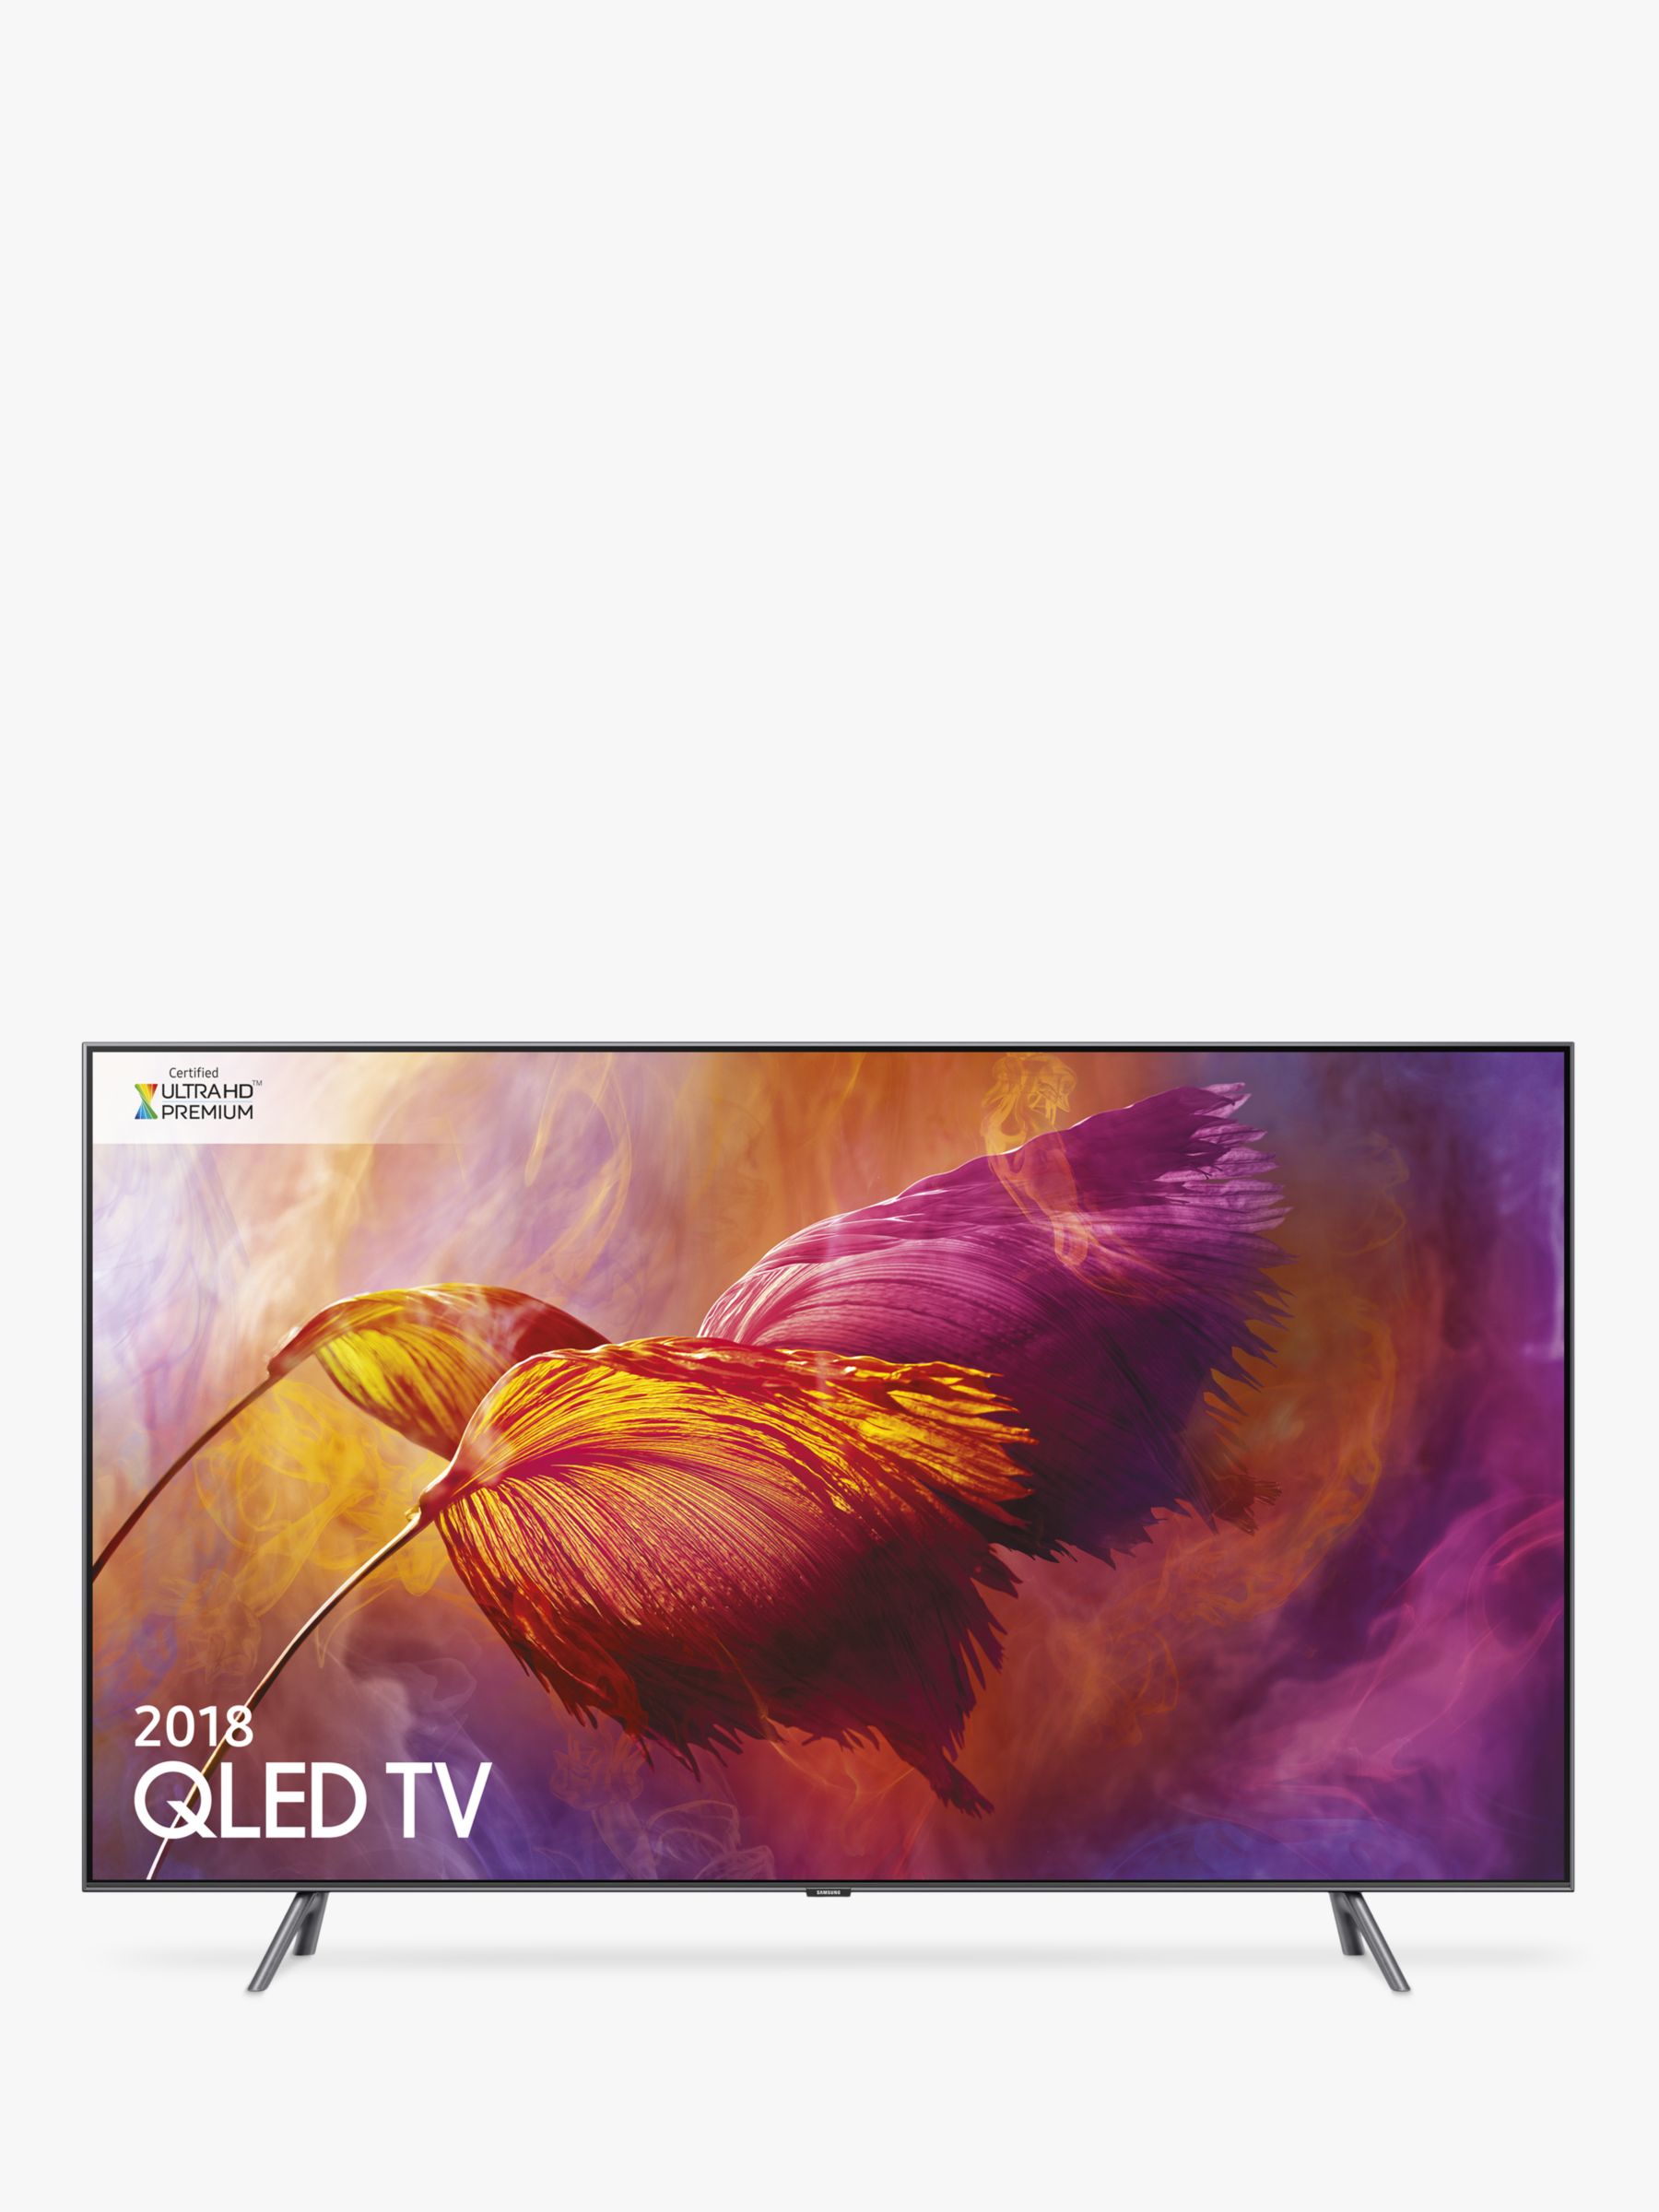 Samsung QE75Q8DN (2018) QLED HDR 1500 4K Ultra HD Smart TV, 75 with TVPlus/Freesat HD & 360 Design, Ultra HD Premium Certified, Black